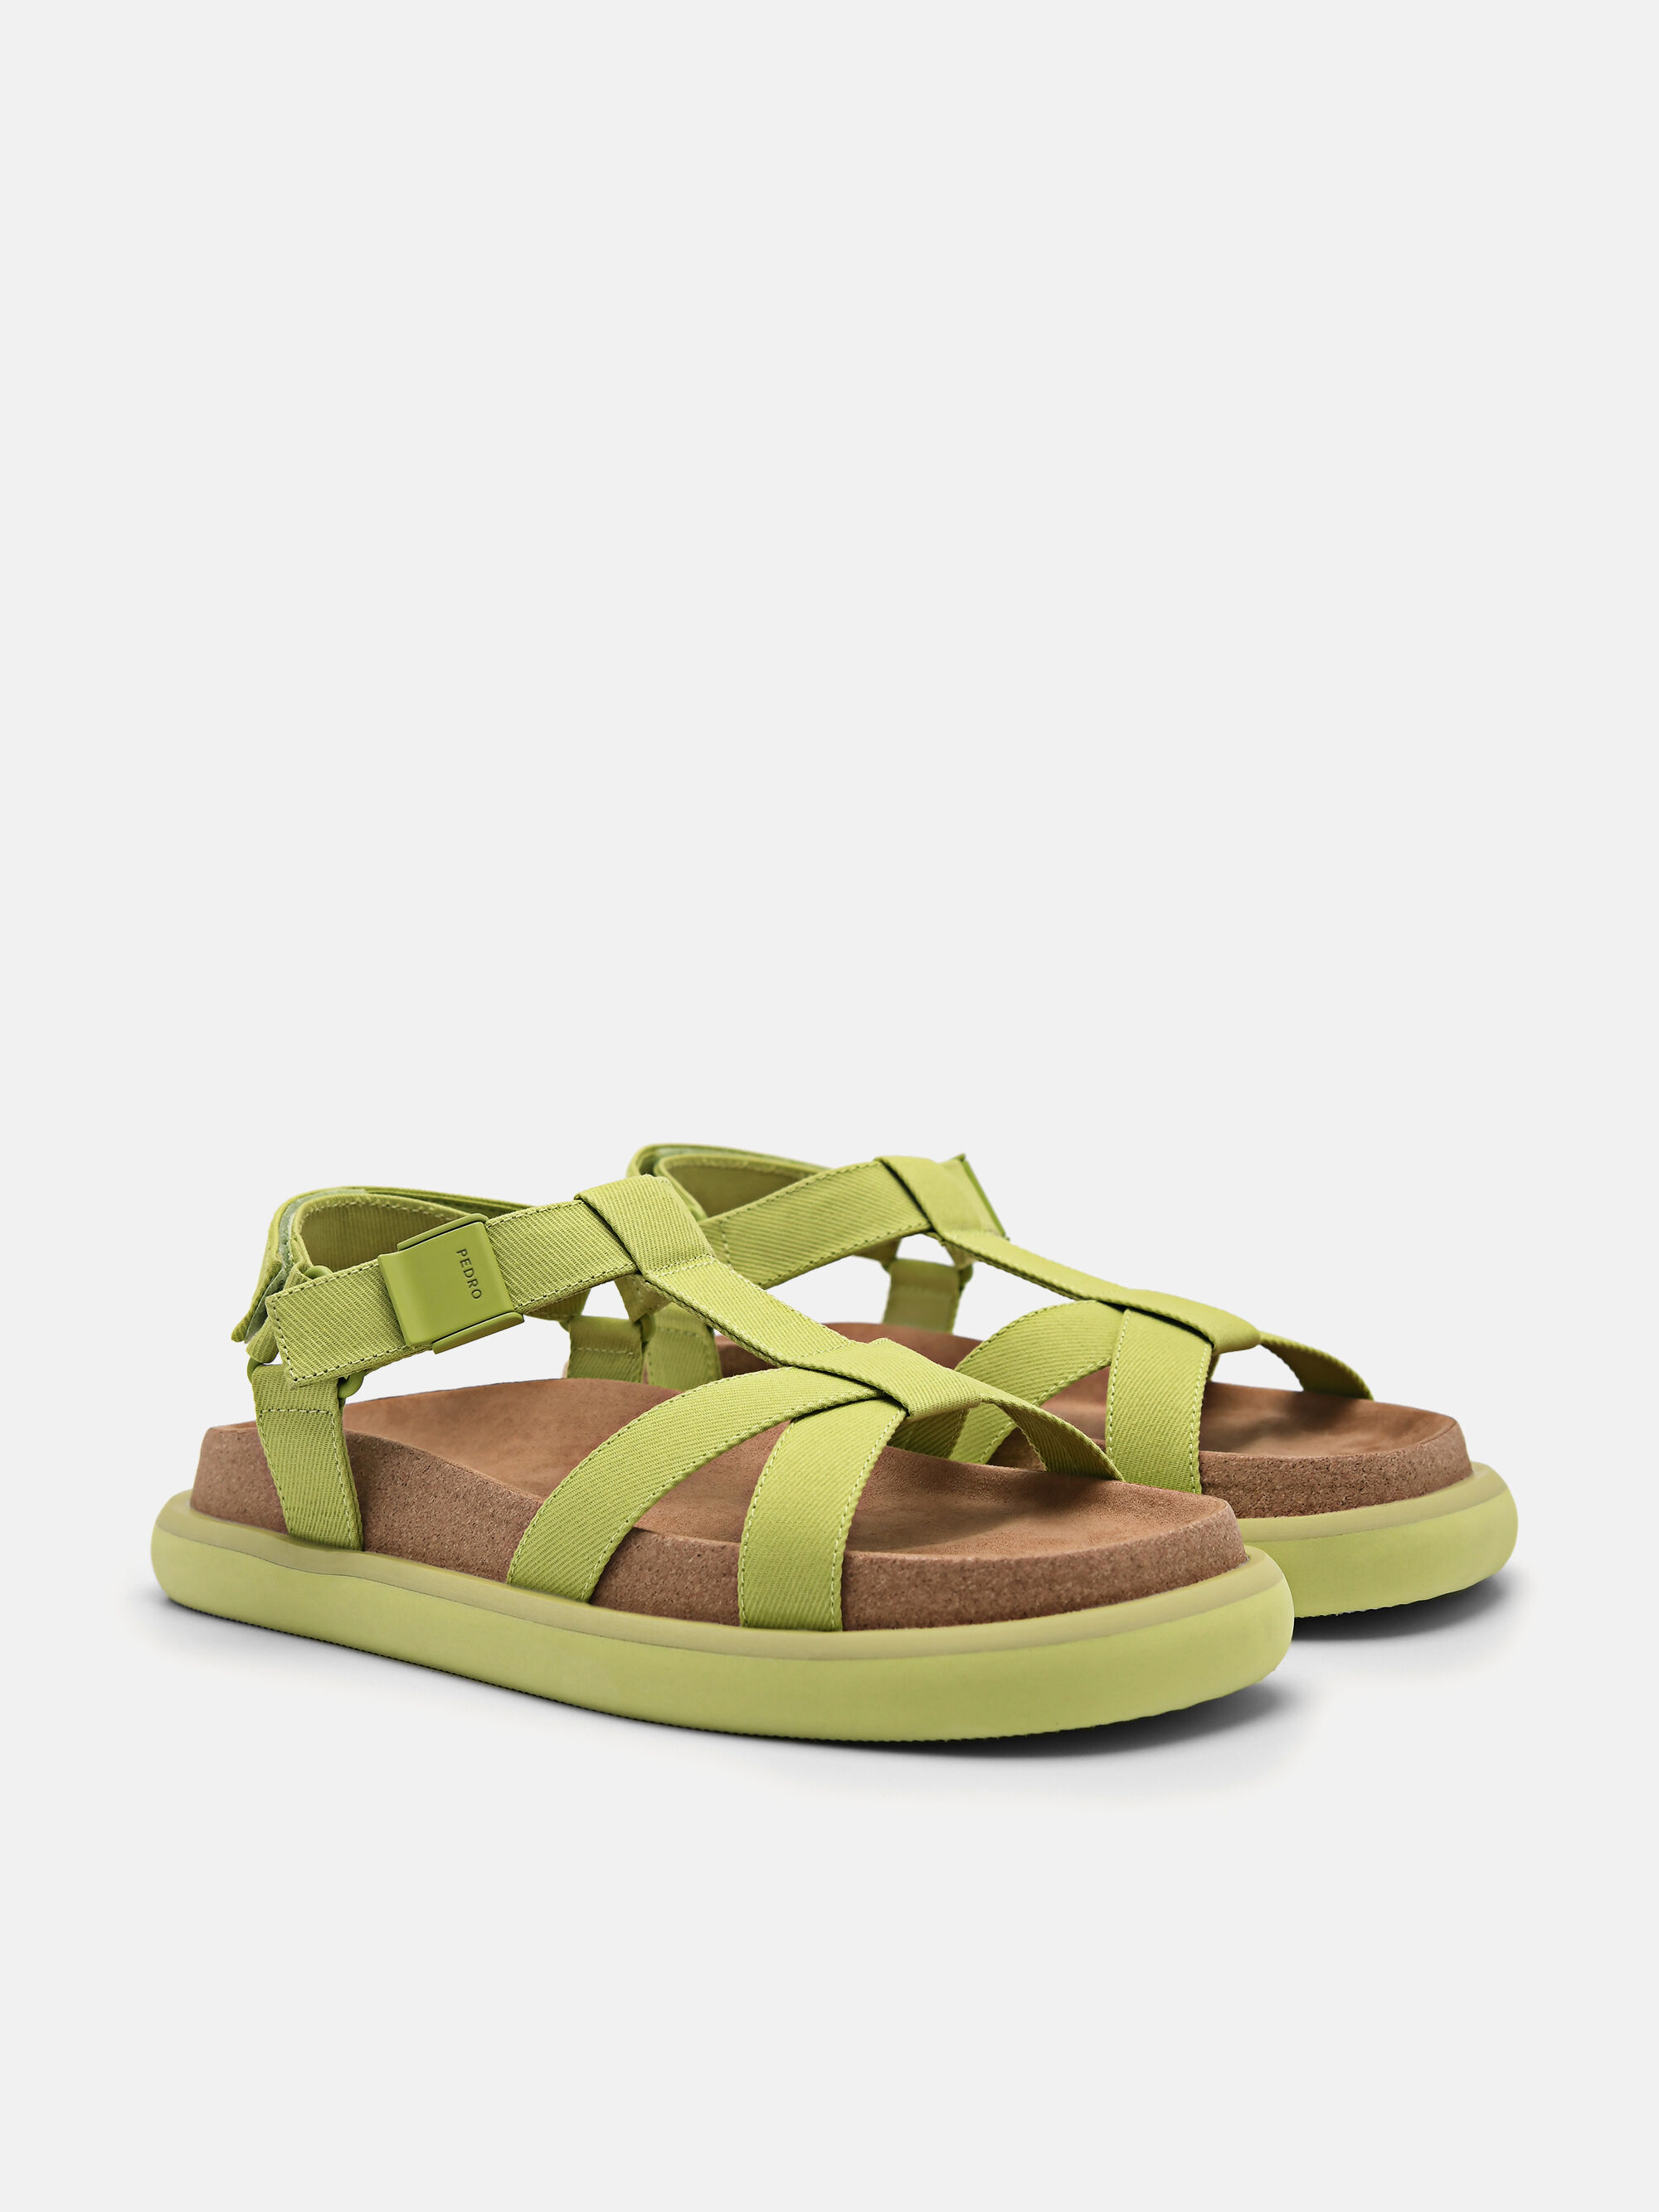 rePEDRO Canvas Band Sandals, Green